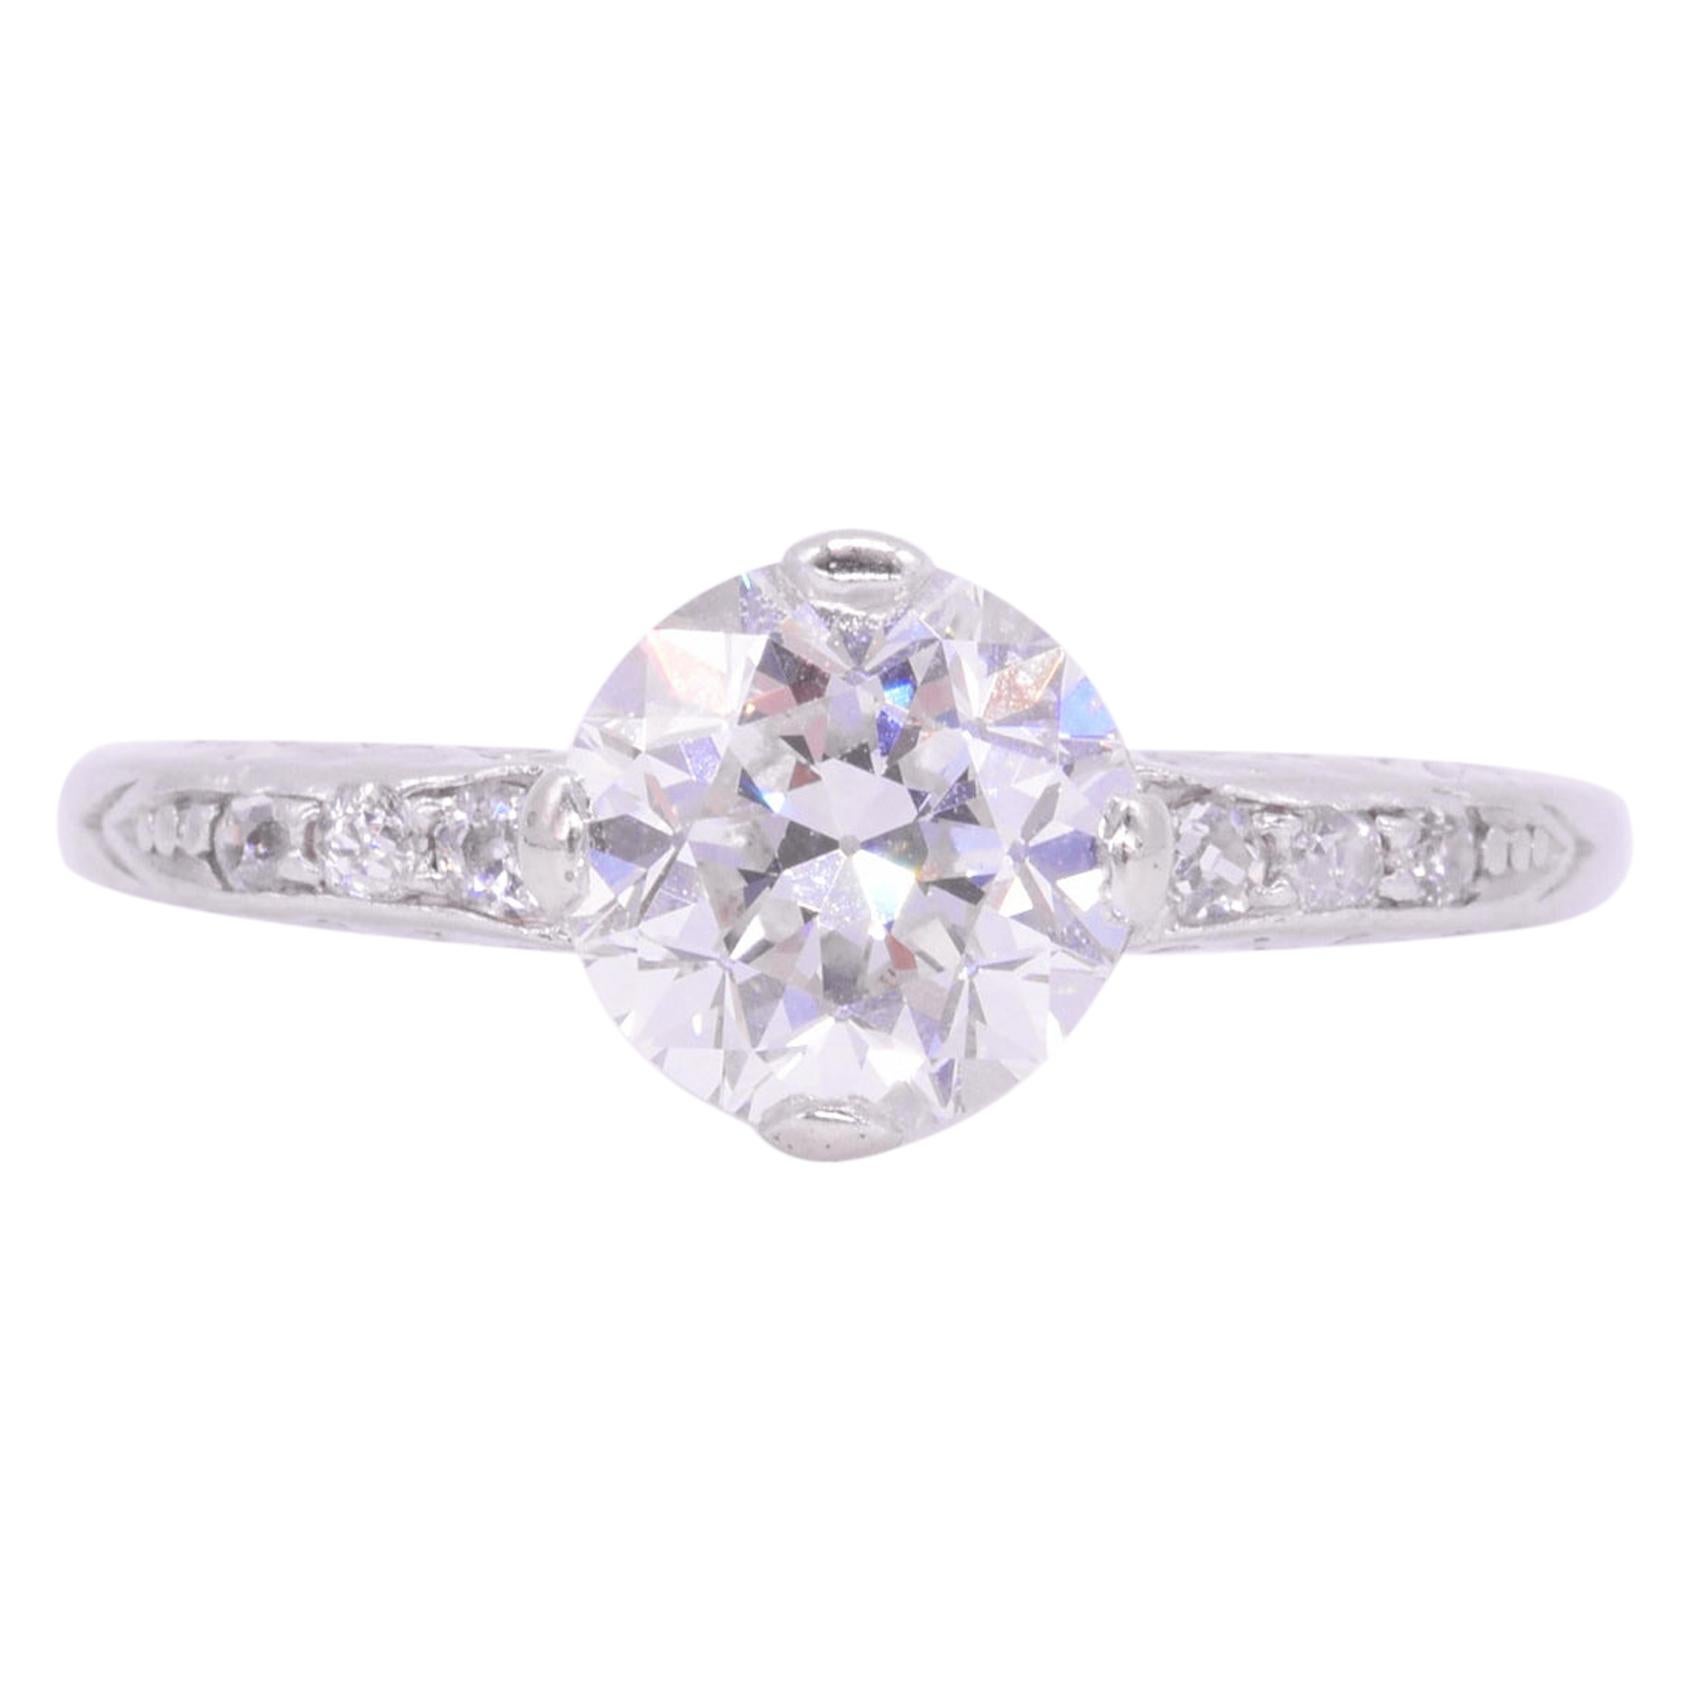 Art Deco 1.35 Carat Old European Cut Diamond Engagement Ring, circa 1920s